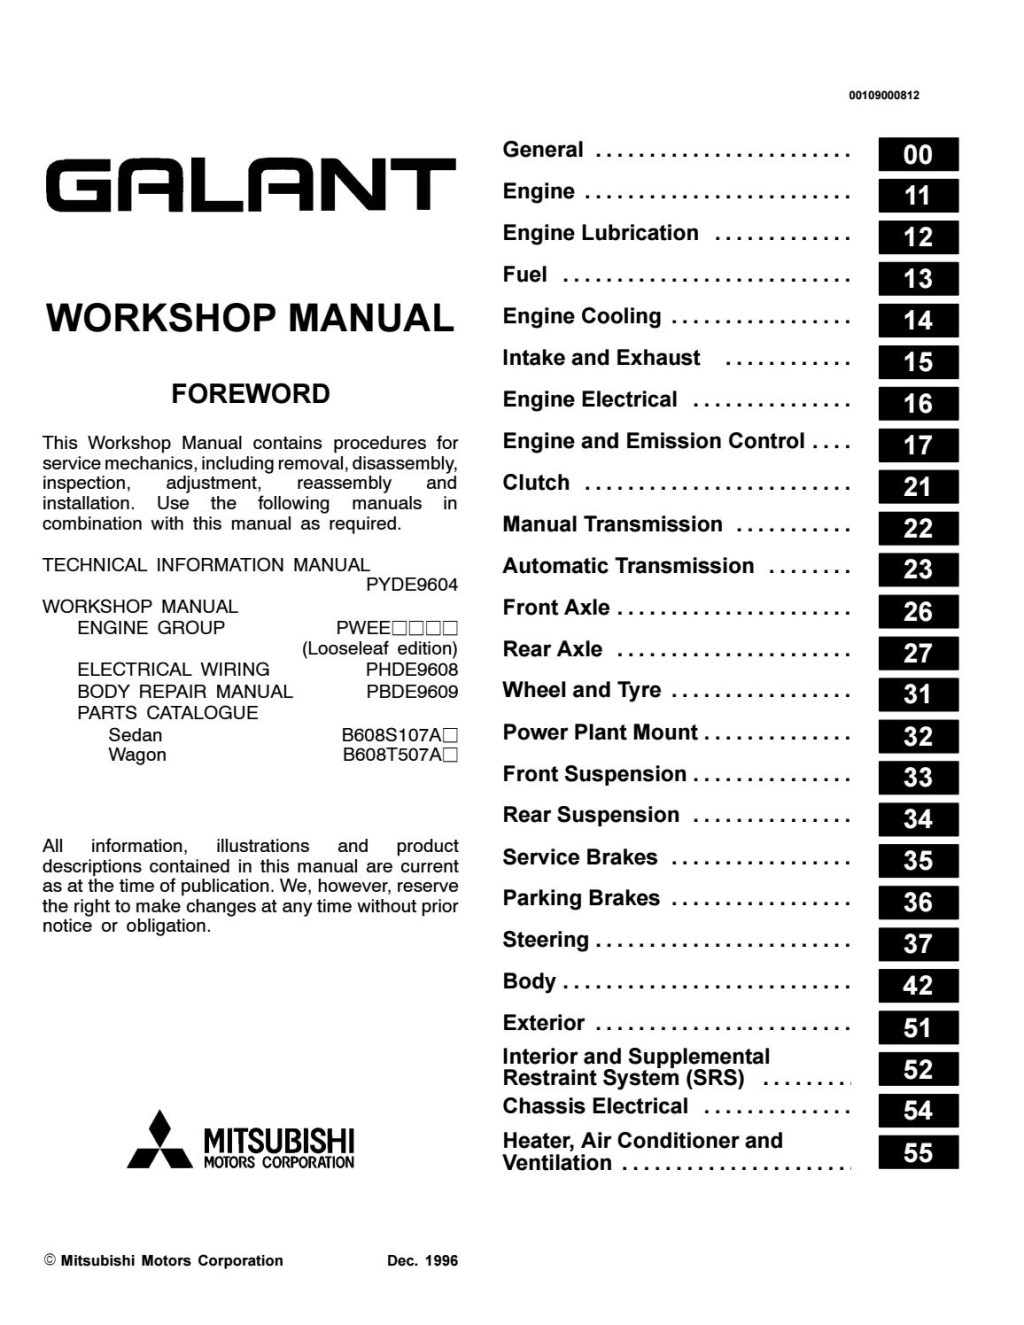 mitsubishi galant es 2002 owners manual - Mitsubishi Galant Service Repair Manual by gu - Issuu